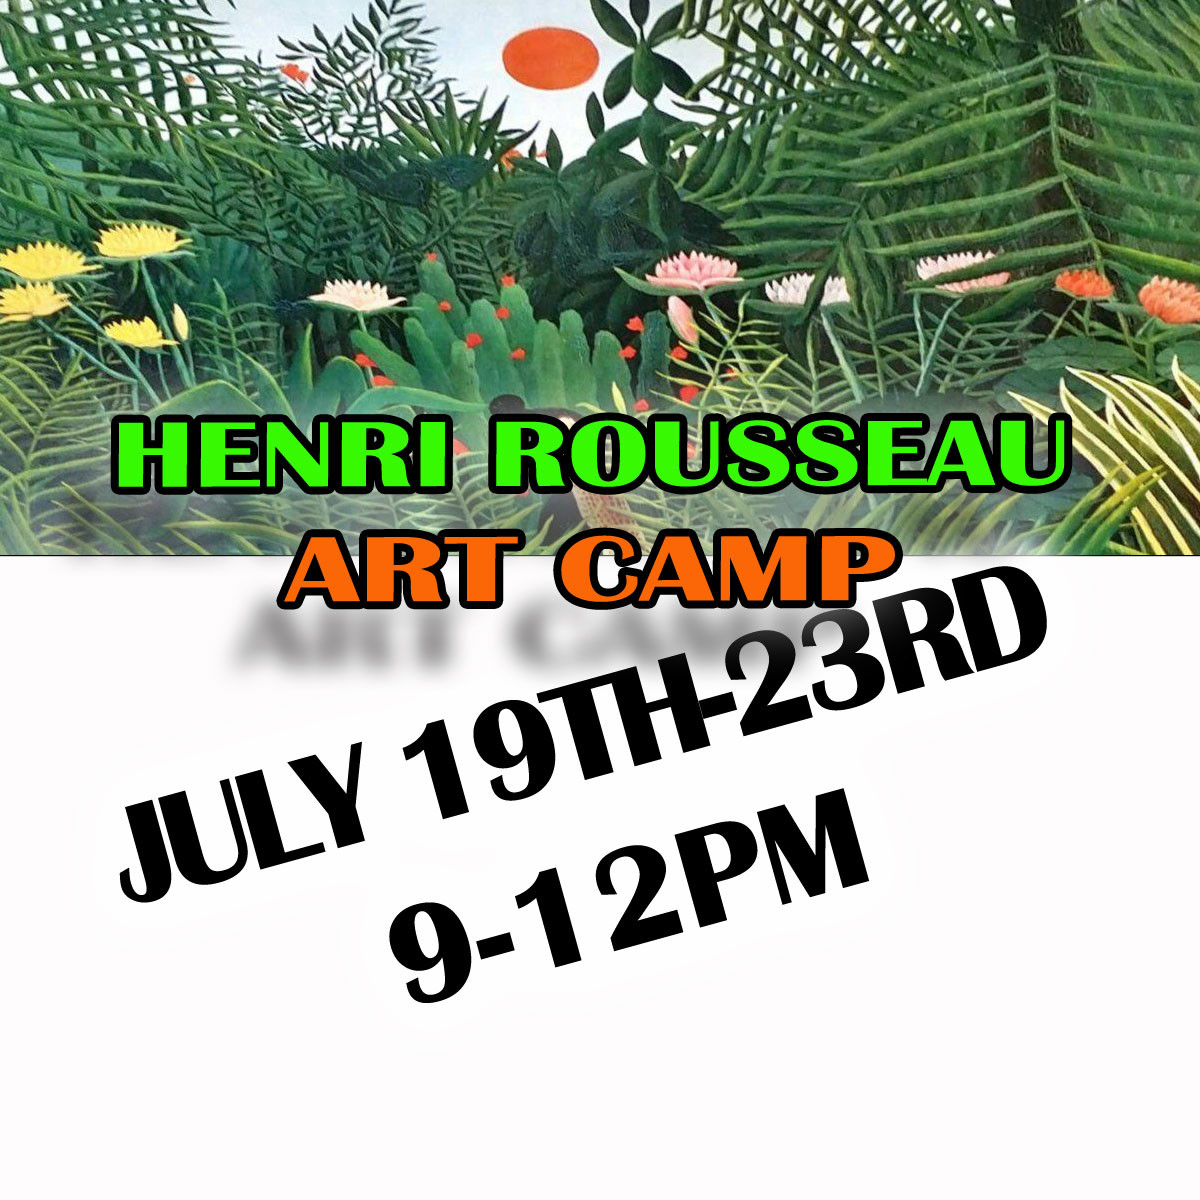 2021-JULY-19-Art-Camp-HENRI ROUSSEAU-AM.jpg